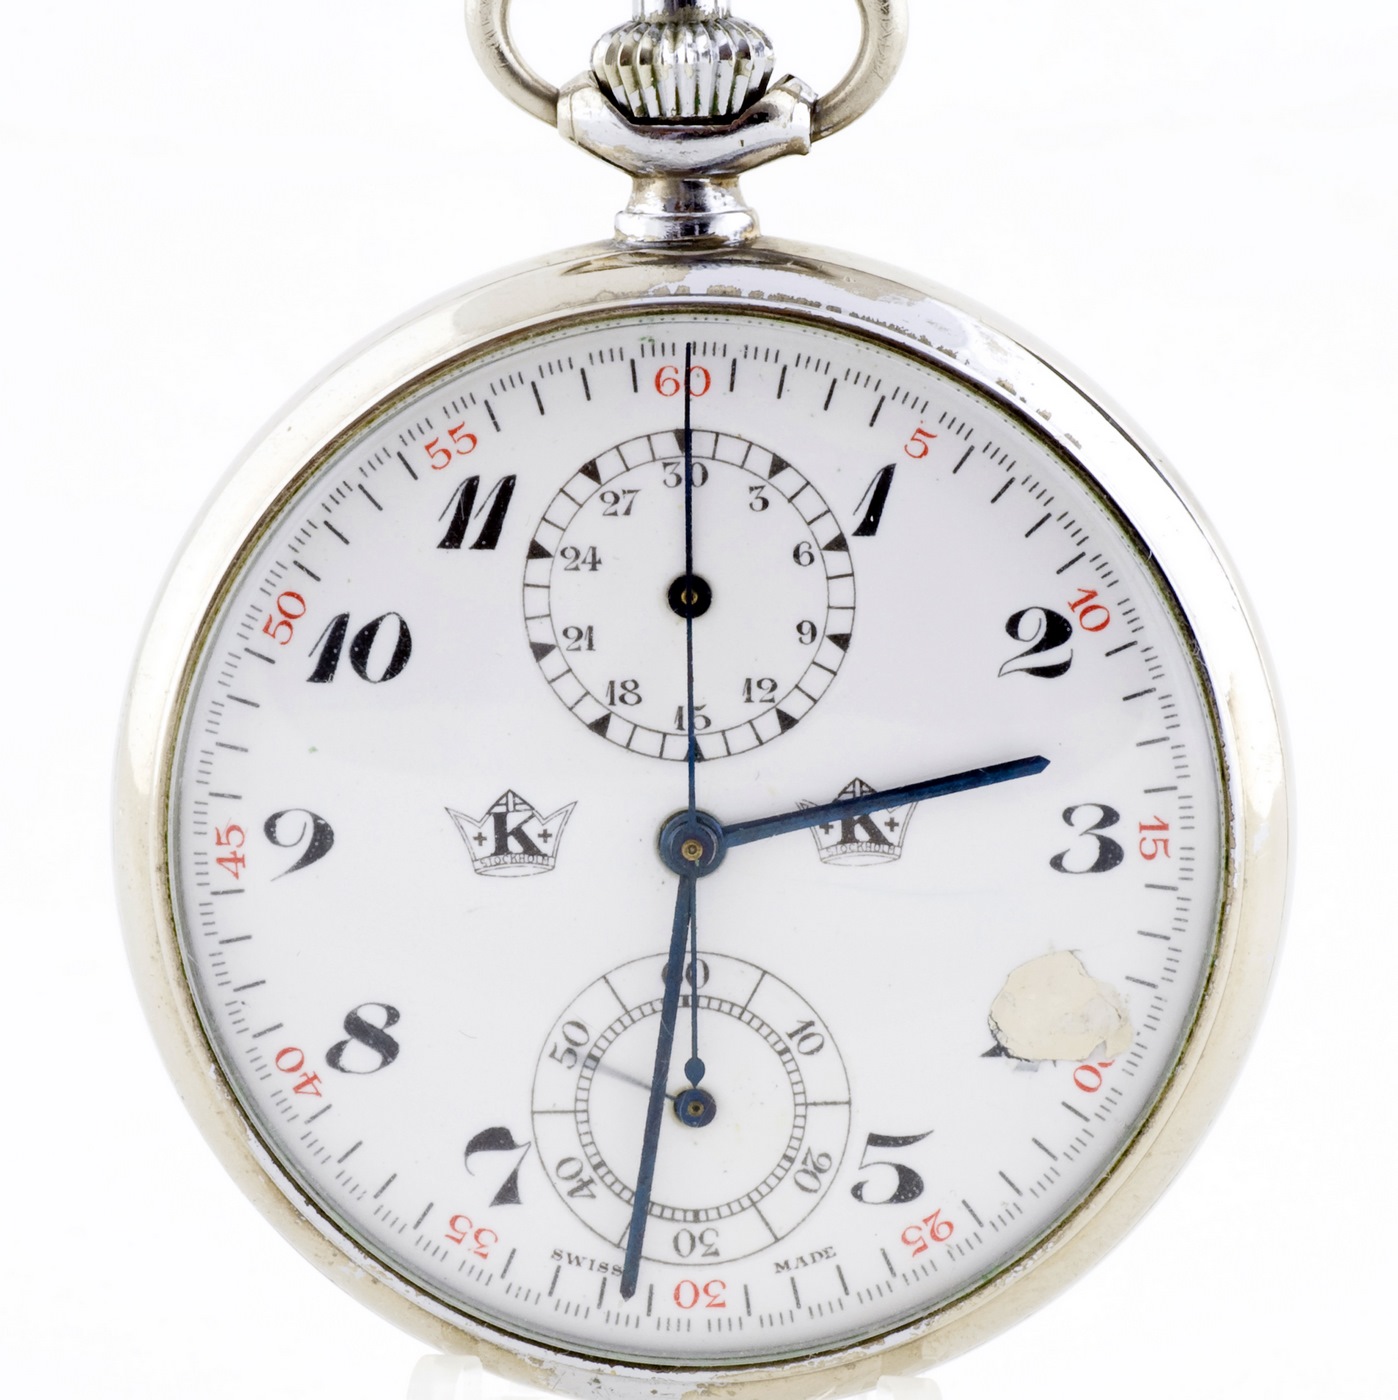 Swiss Chronometer Watch, Lepine and remontoir. Switzerland, ca. 1920.